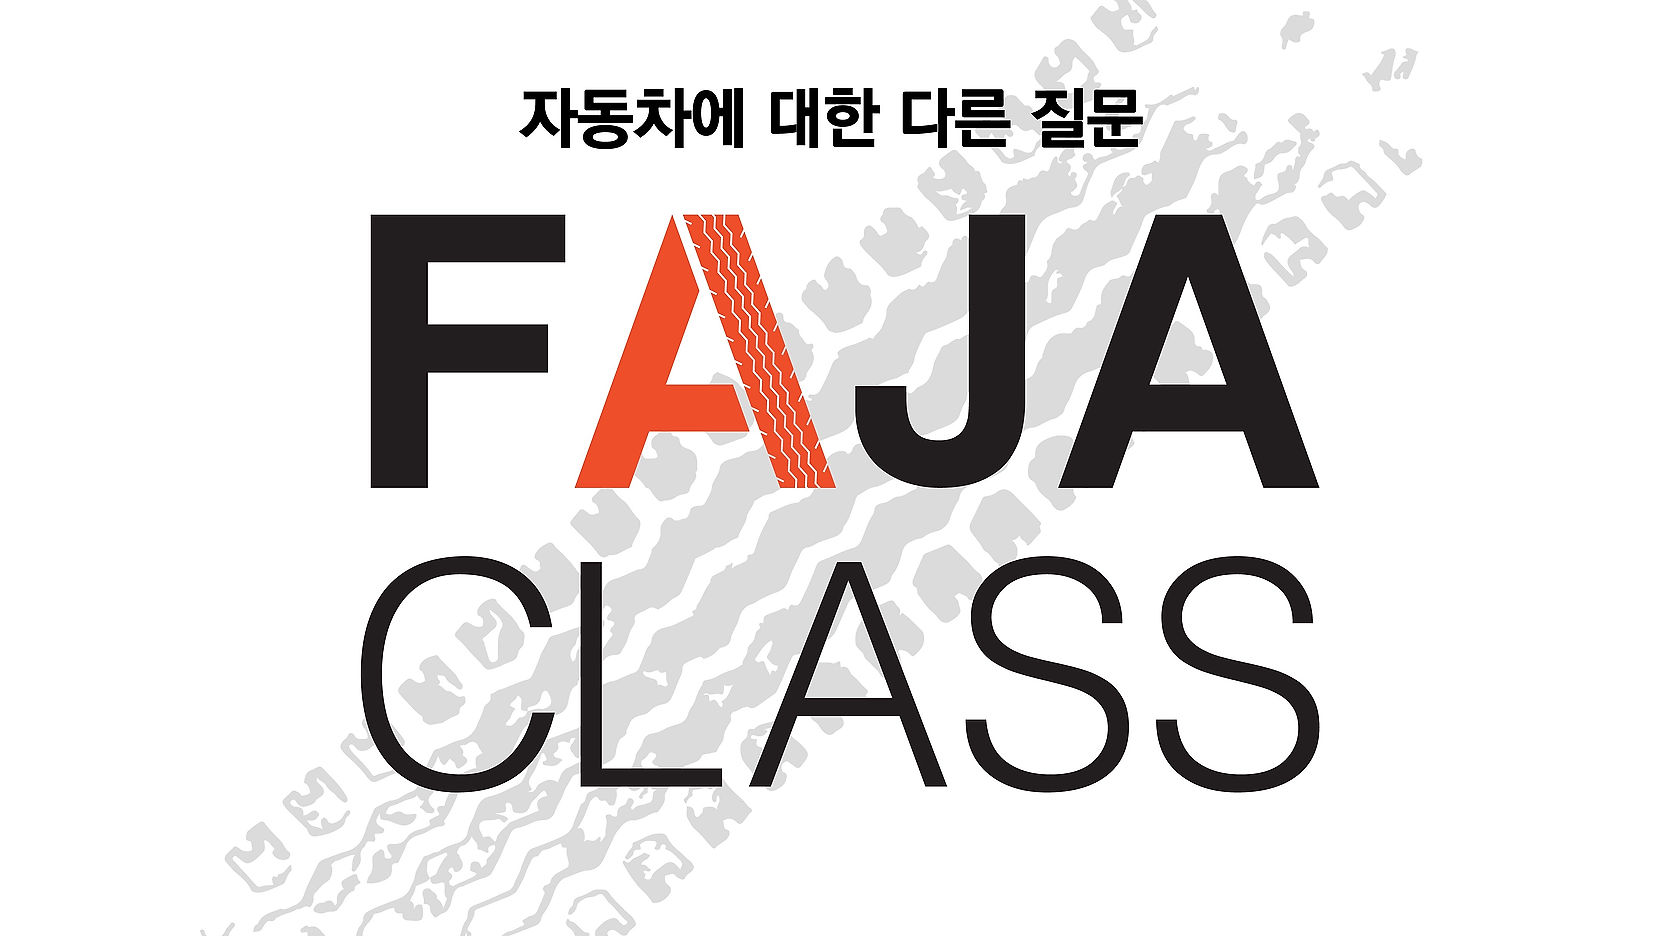 FAJA CLASS TEASER